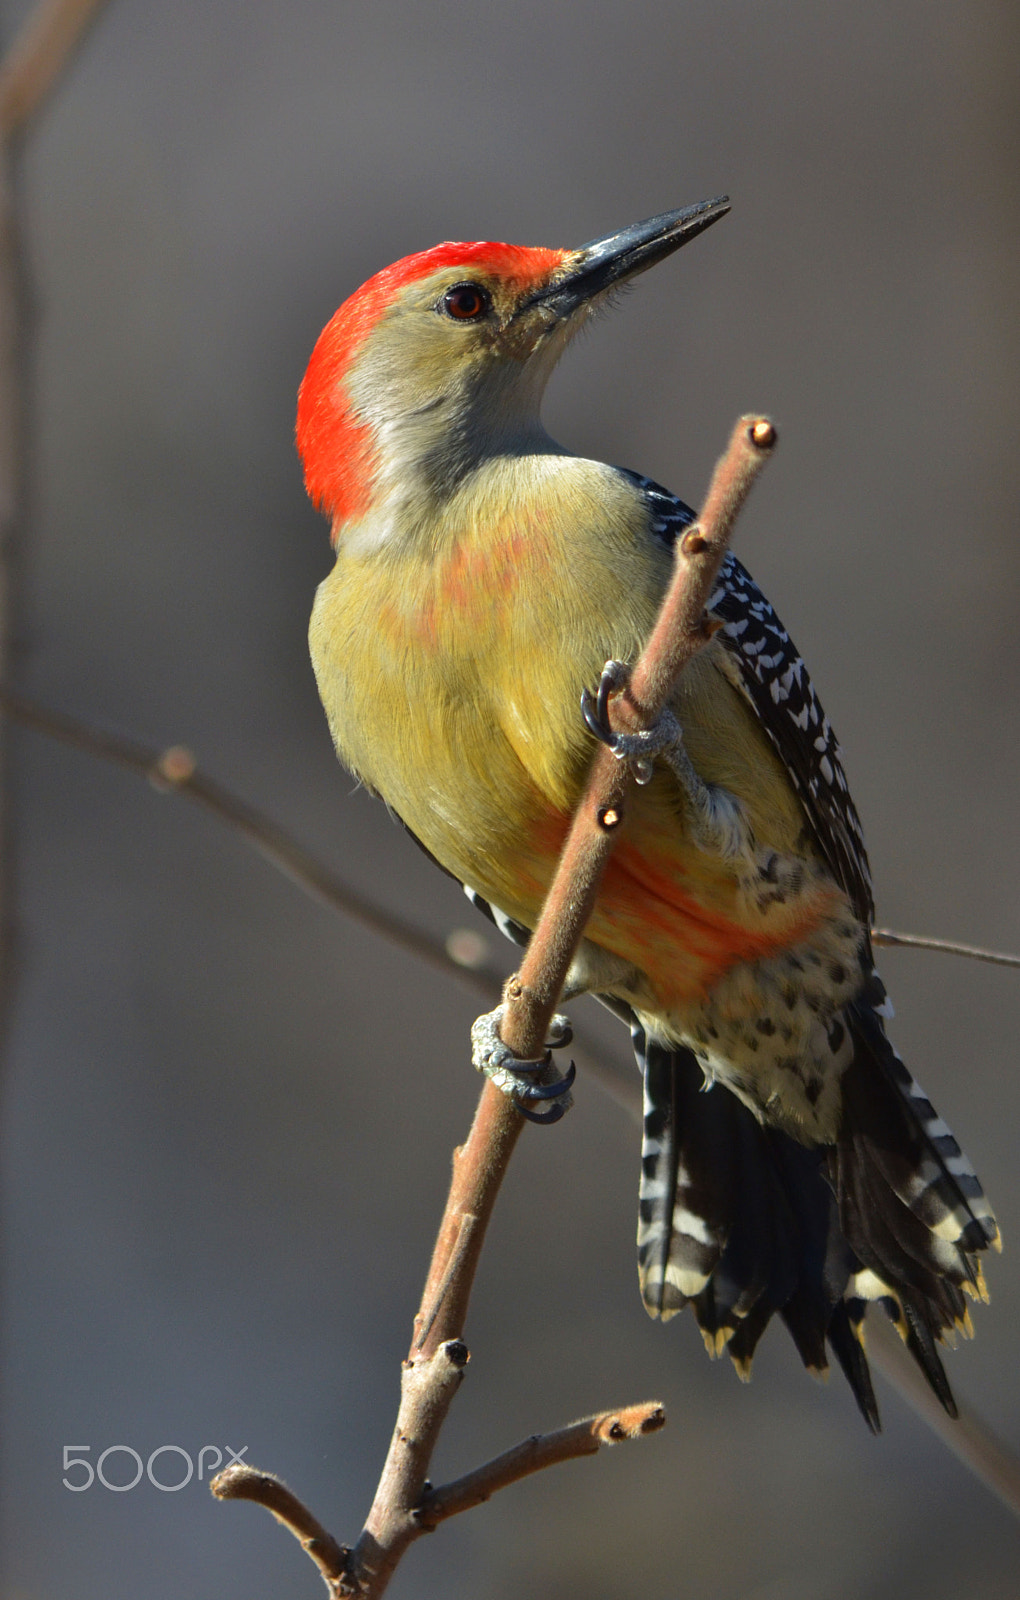 AF Nikkor 20mm f/2.8 sample photo. Red bellied woodpecker photography